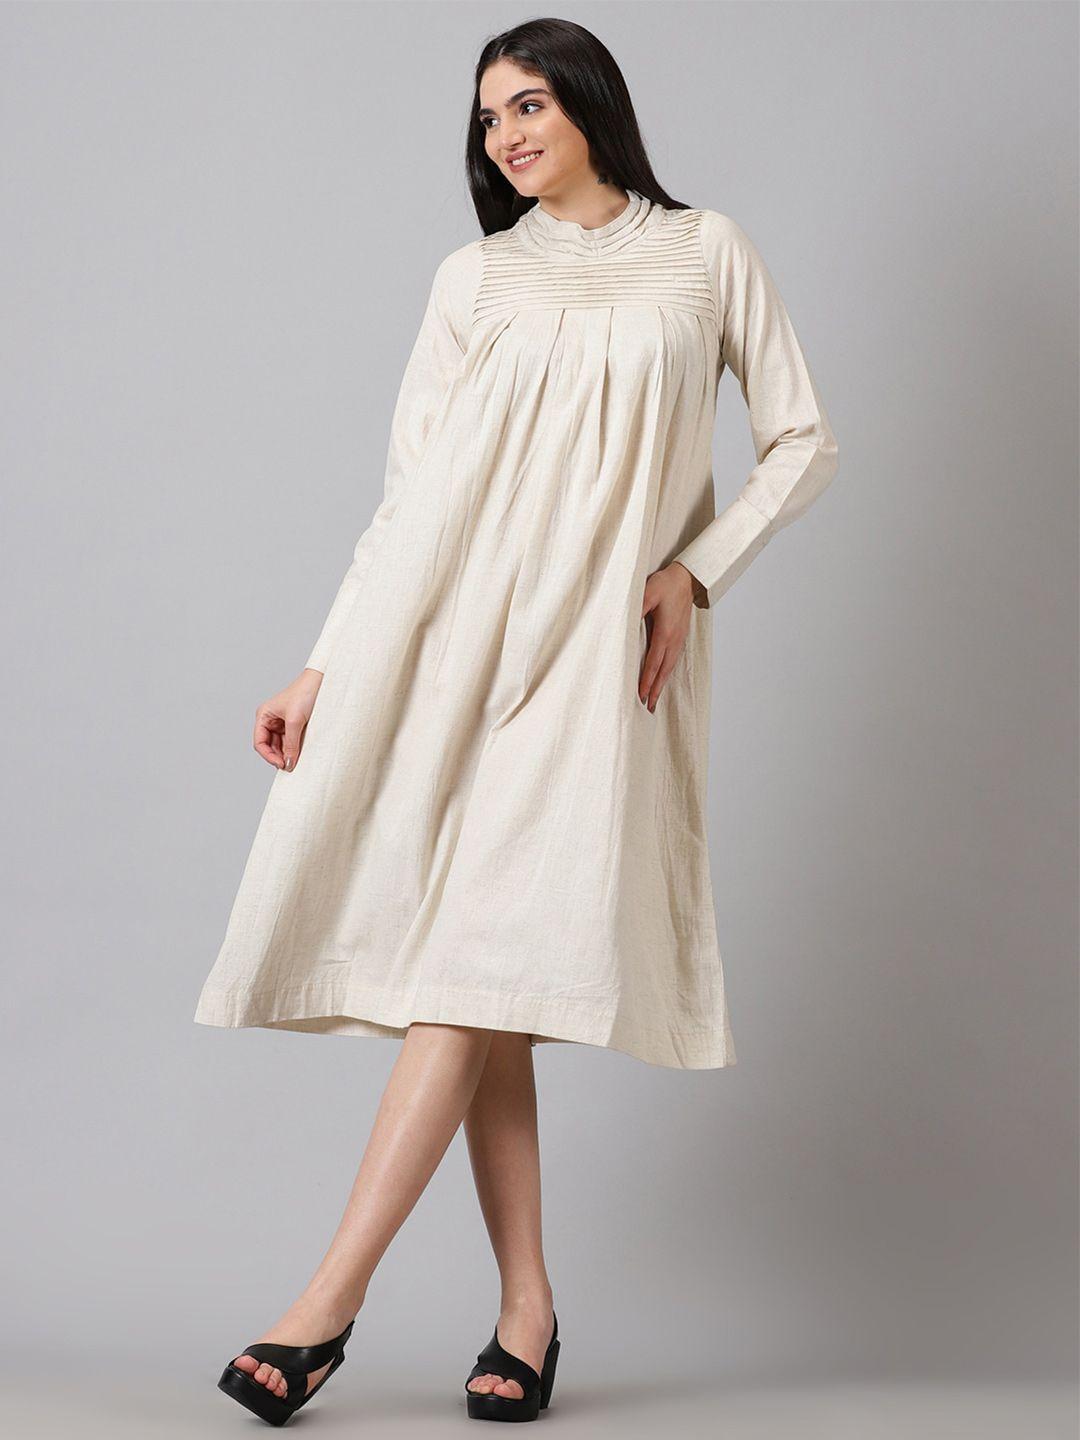 jilmil off white ethnic motifs print a-line midi dress